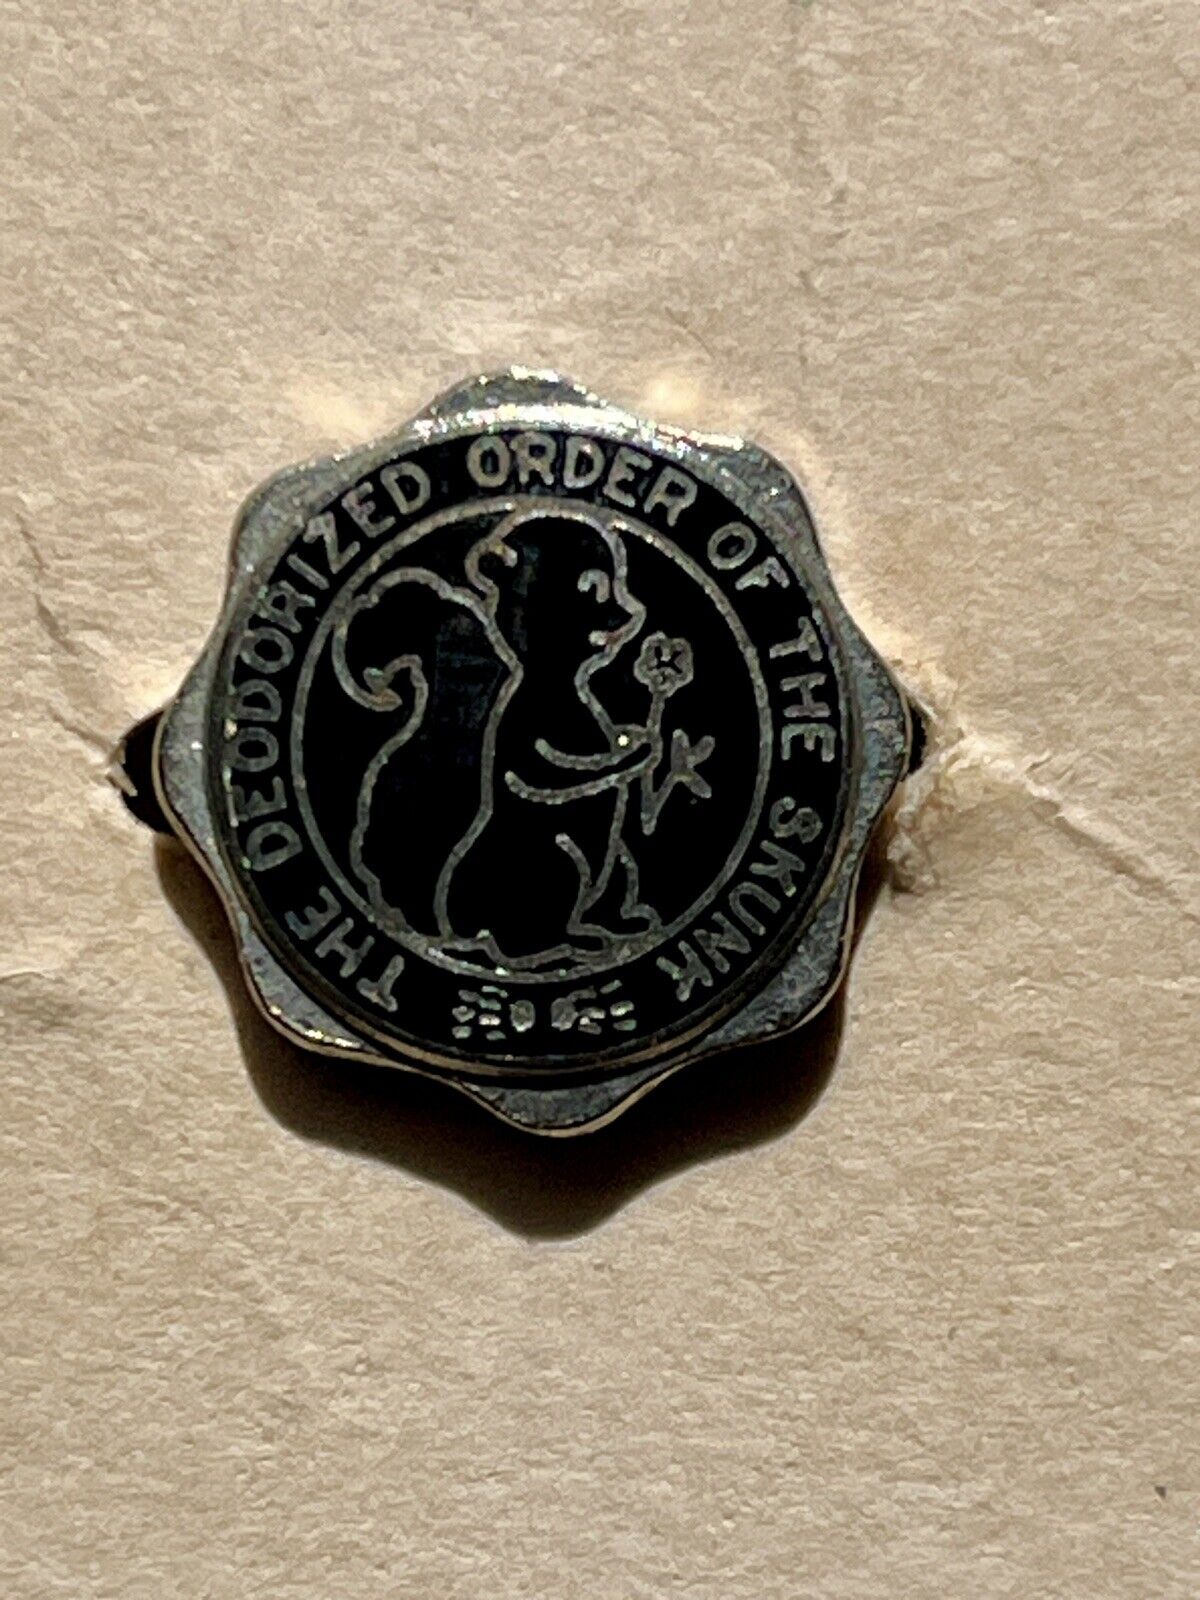 The Deodorized Order of the Skunk Pin NOS - In Original Cellophane Envelope